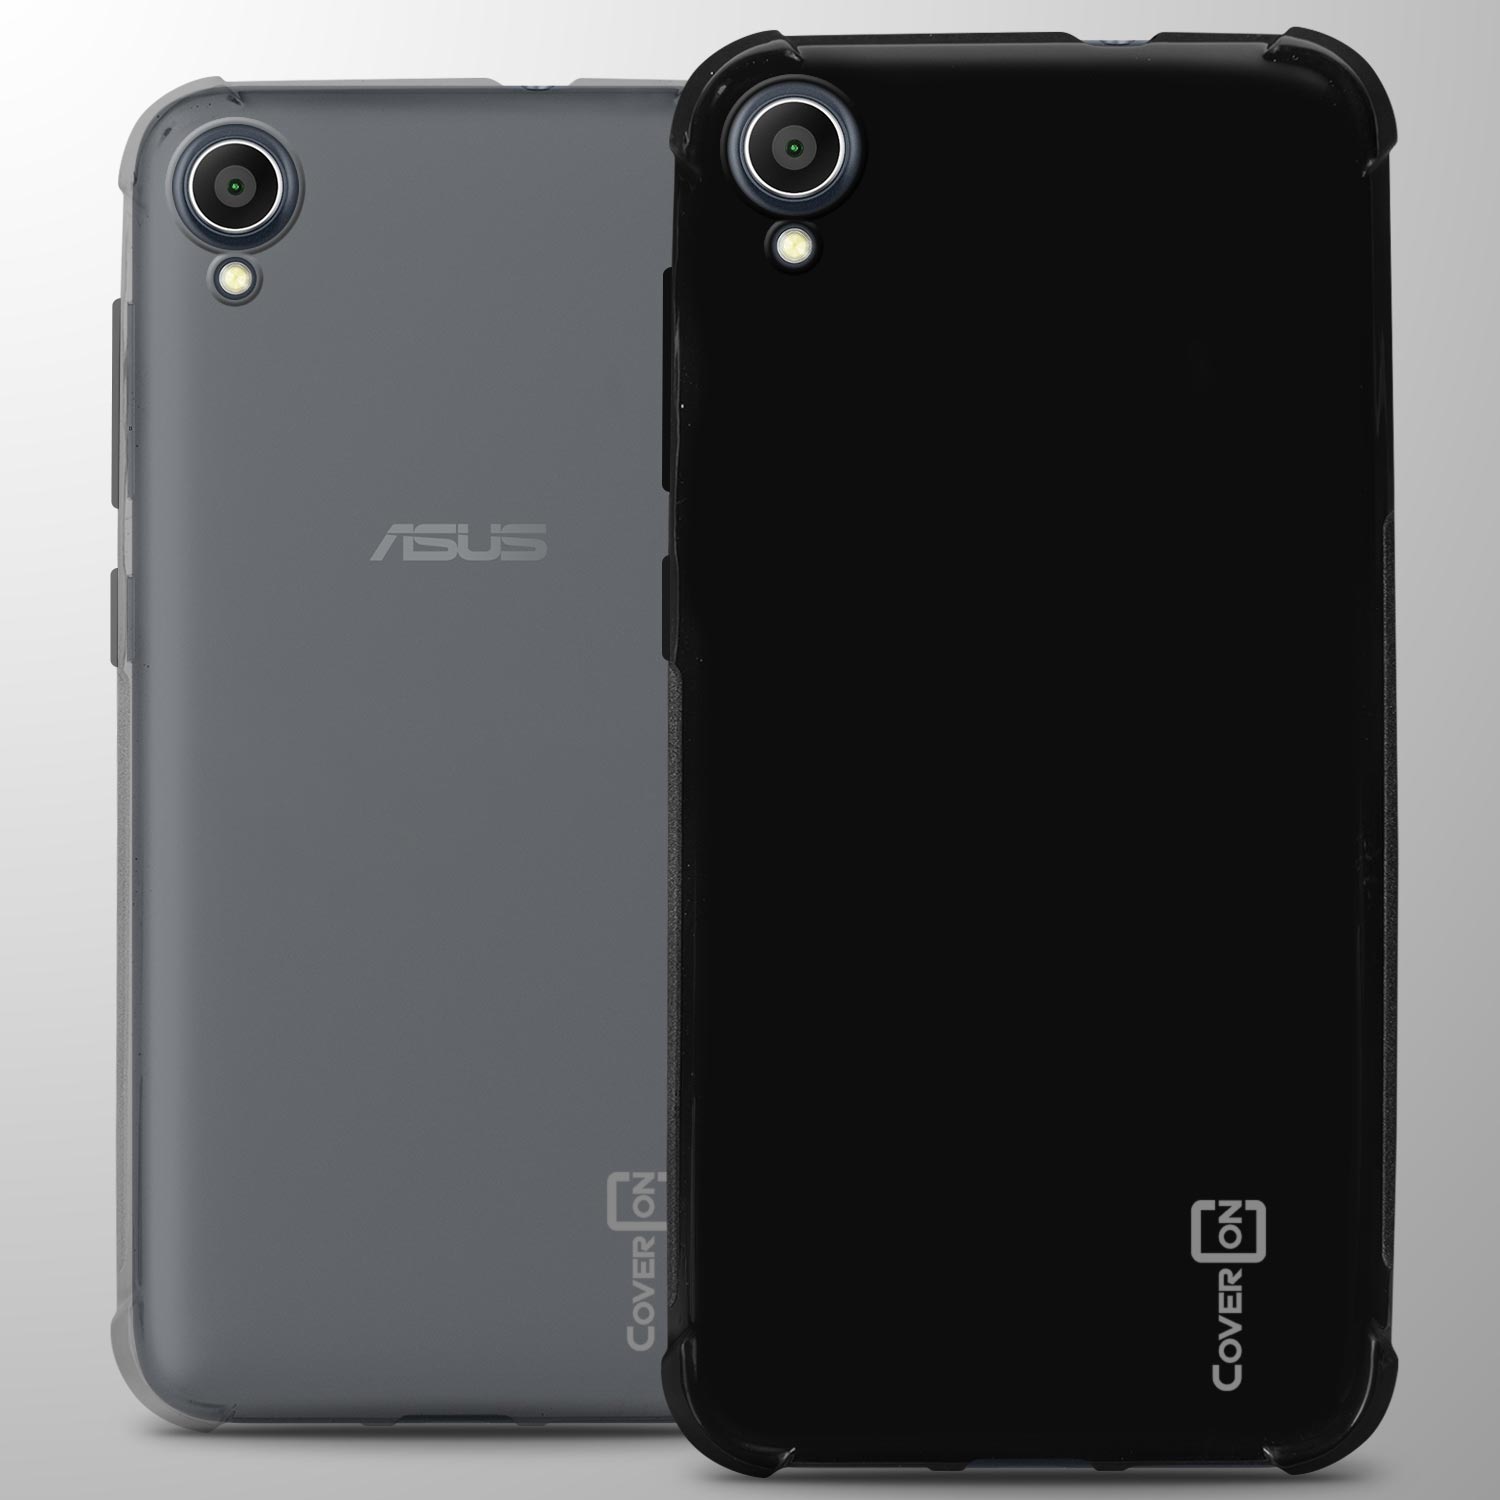 For Asus Zenfone Live L1 Za550kl Case Slim Flexible Tpu Rubber Gel Phone Cover Ebay